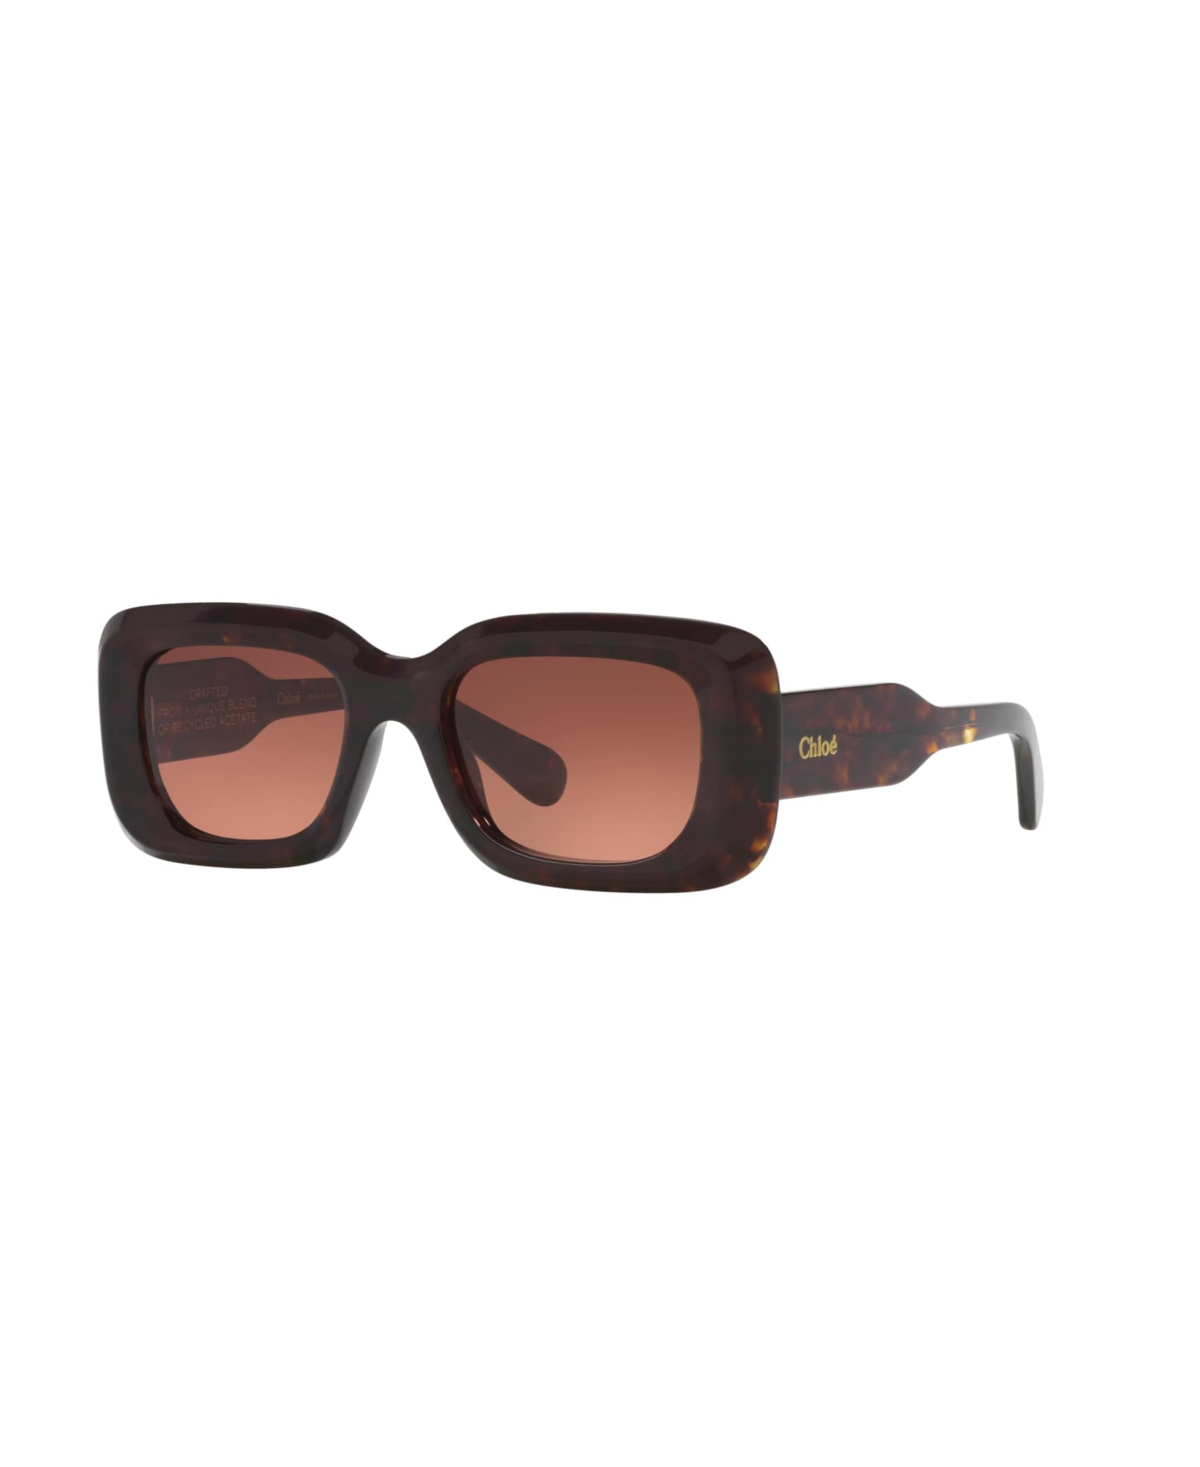 Chloé Women's Sunglasses, Ch0188s In Copper